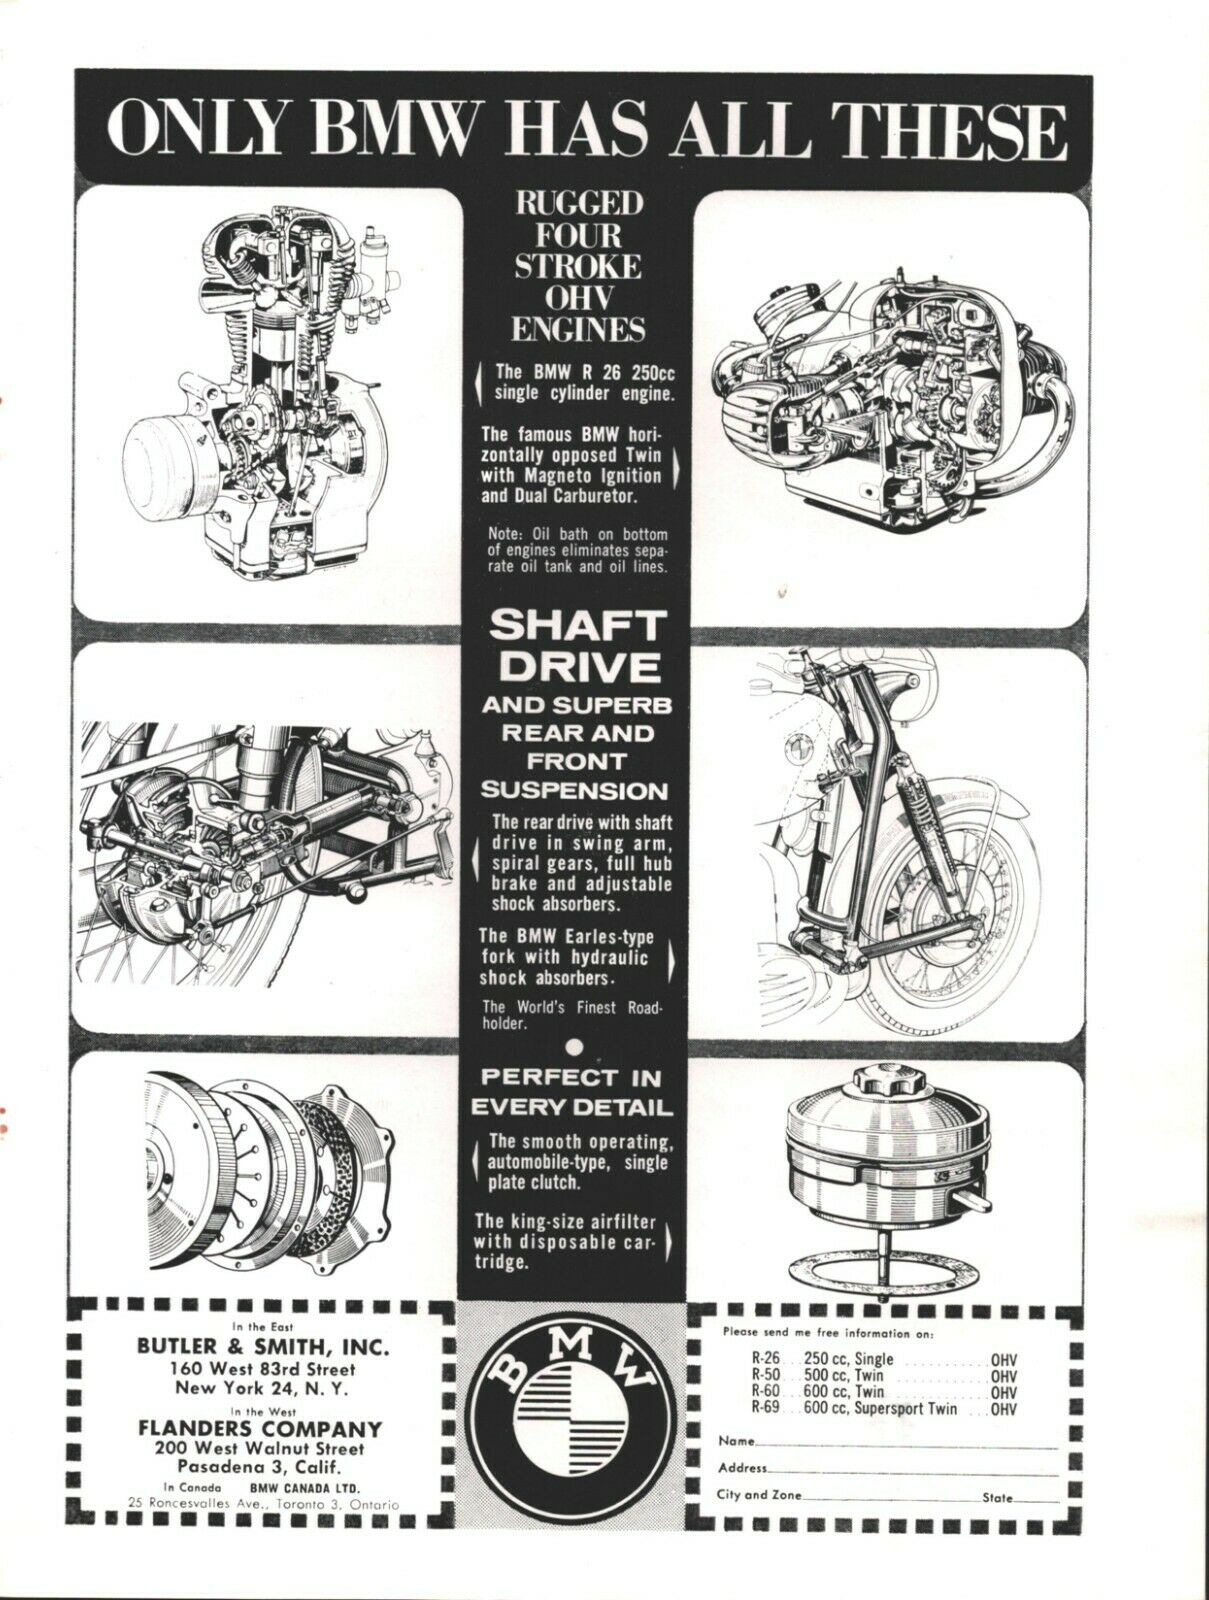 1960 BMW R26 250cc Single Cylinder Motorcycle Engine & More - Vintage Ad